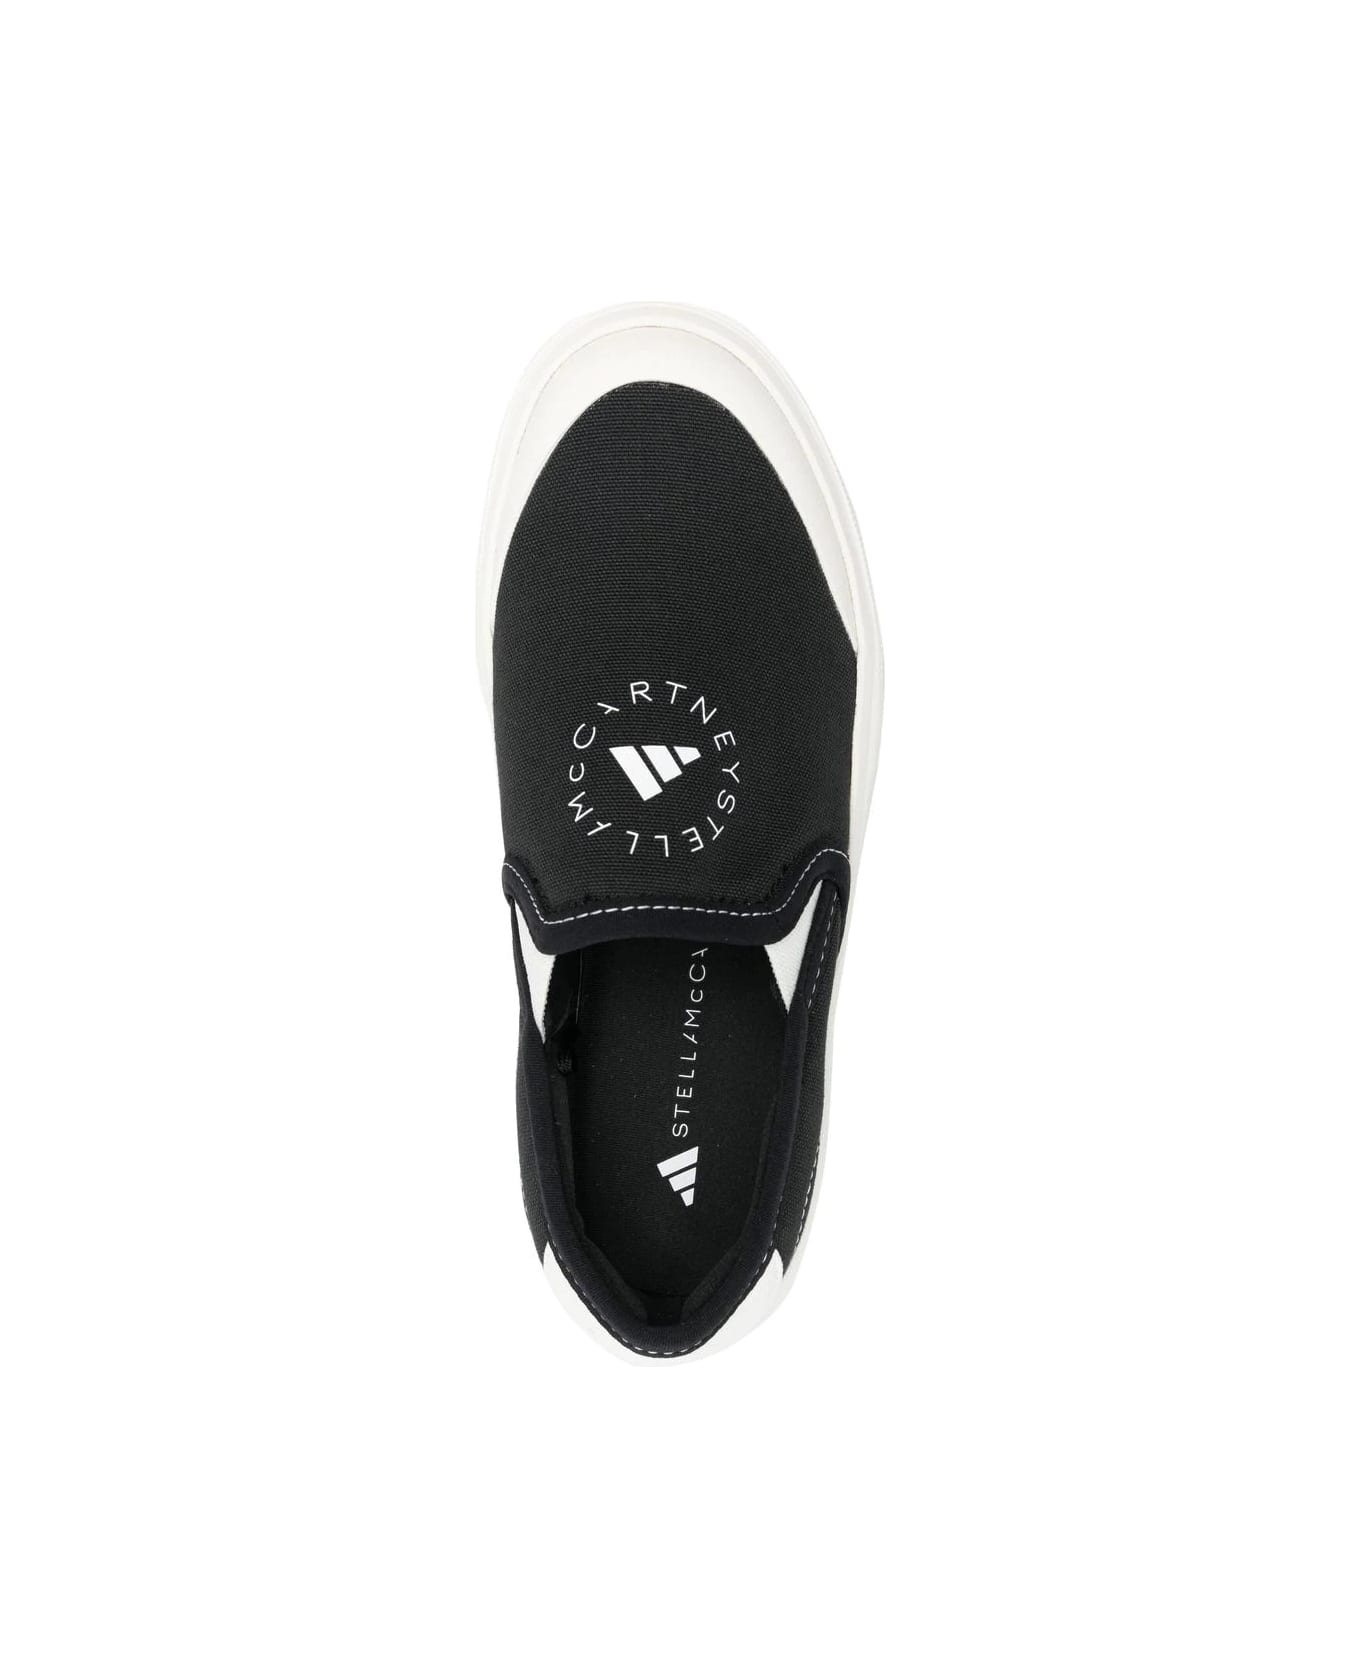 Adidas by Stella McCartney Asmc Court Slip On - Cblack Owhite Ftwwht